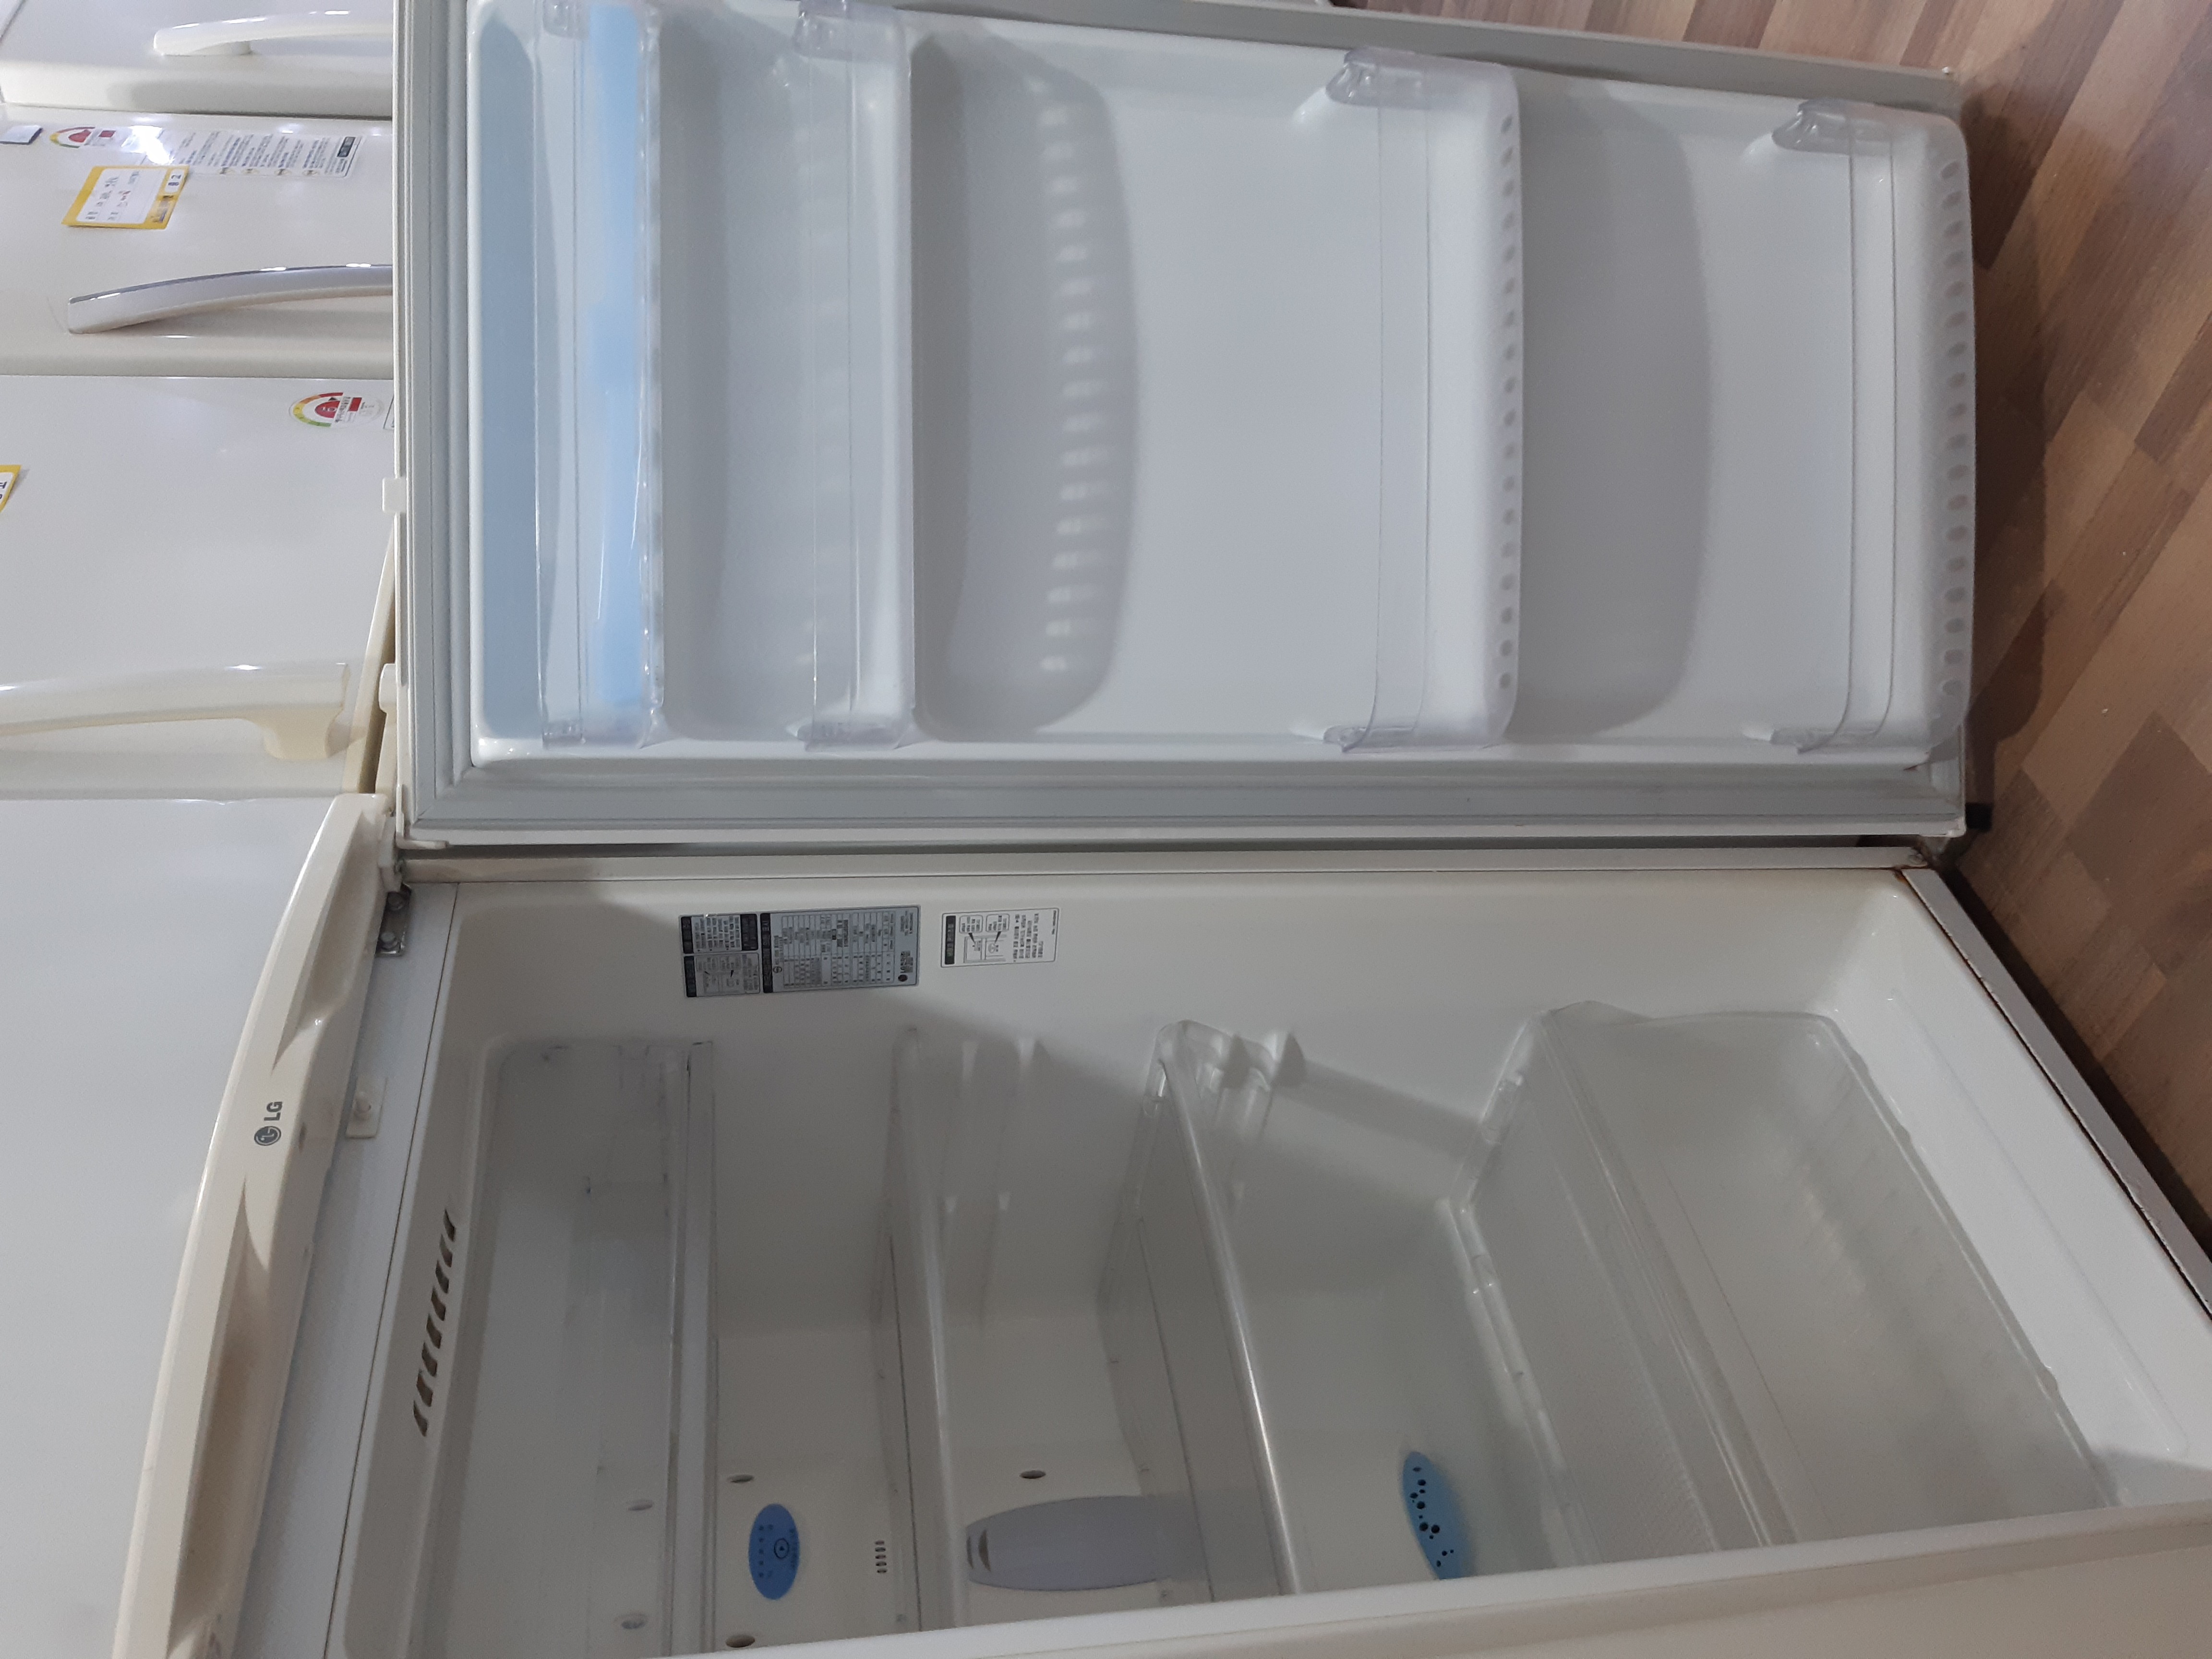 LG 237L 냉장고